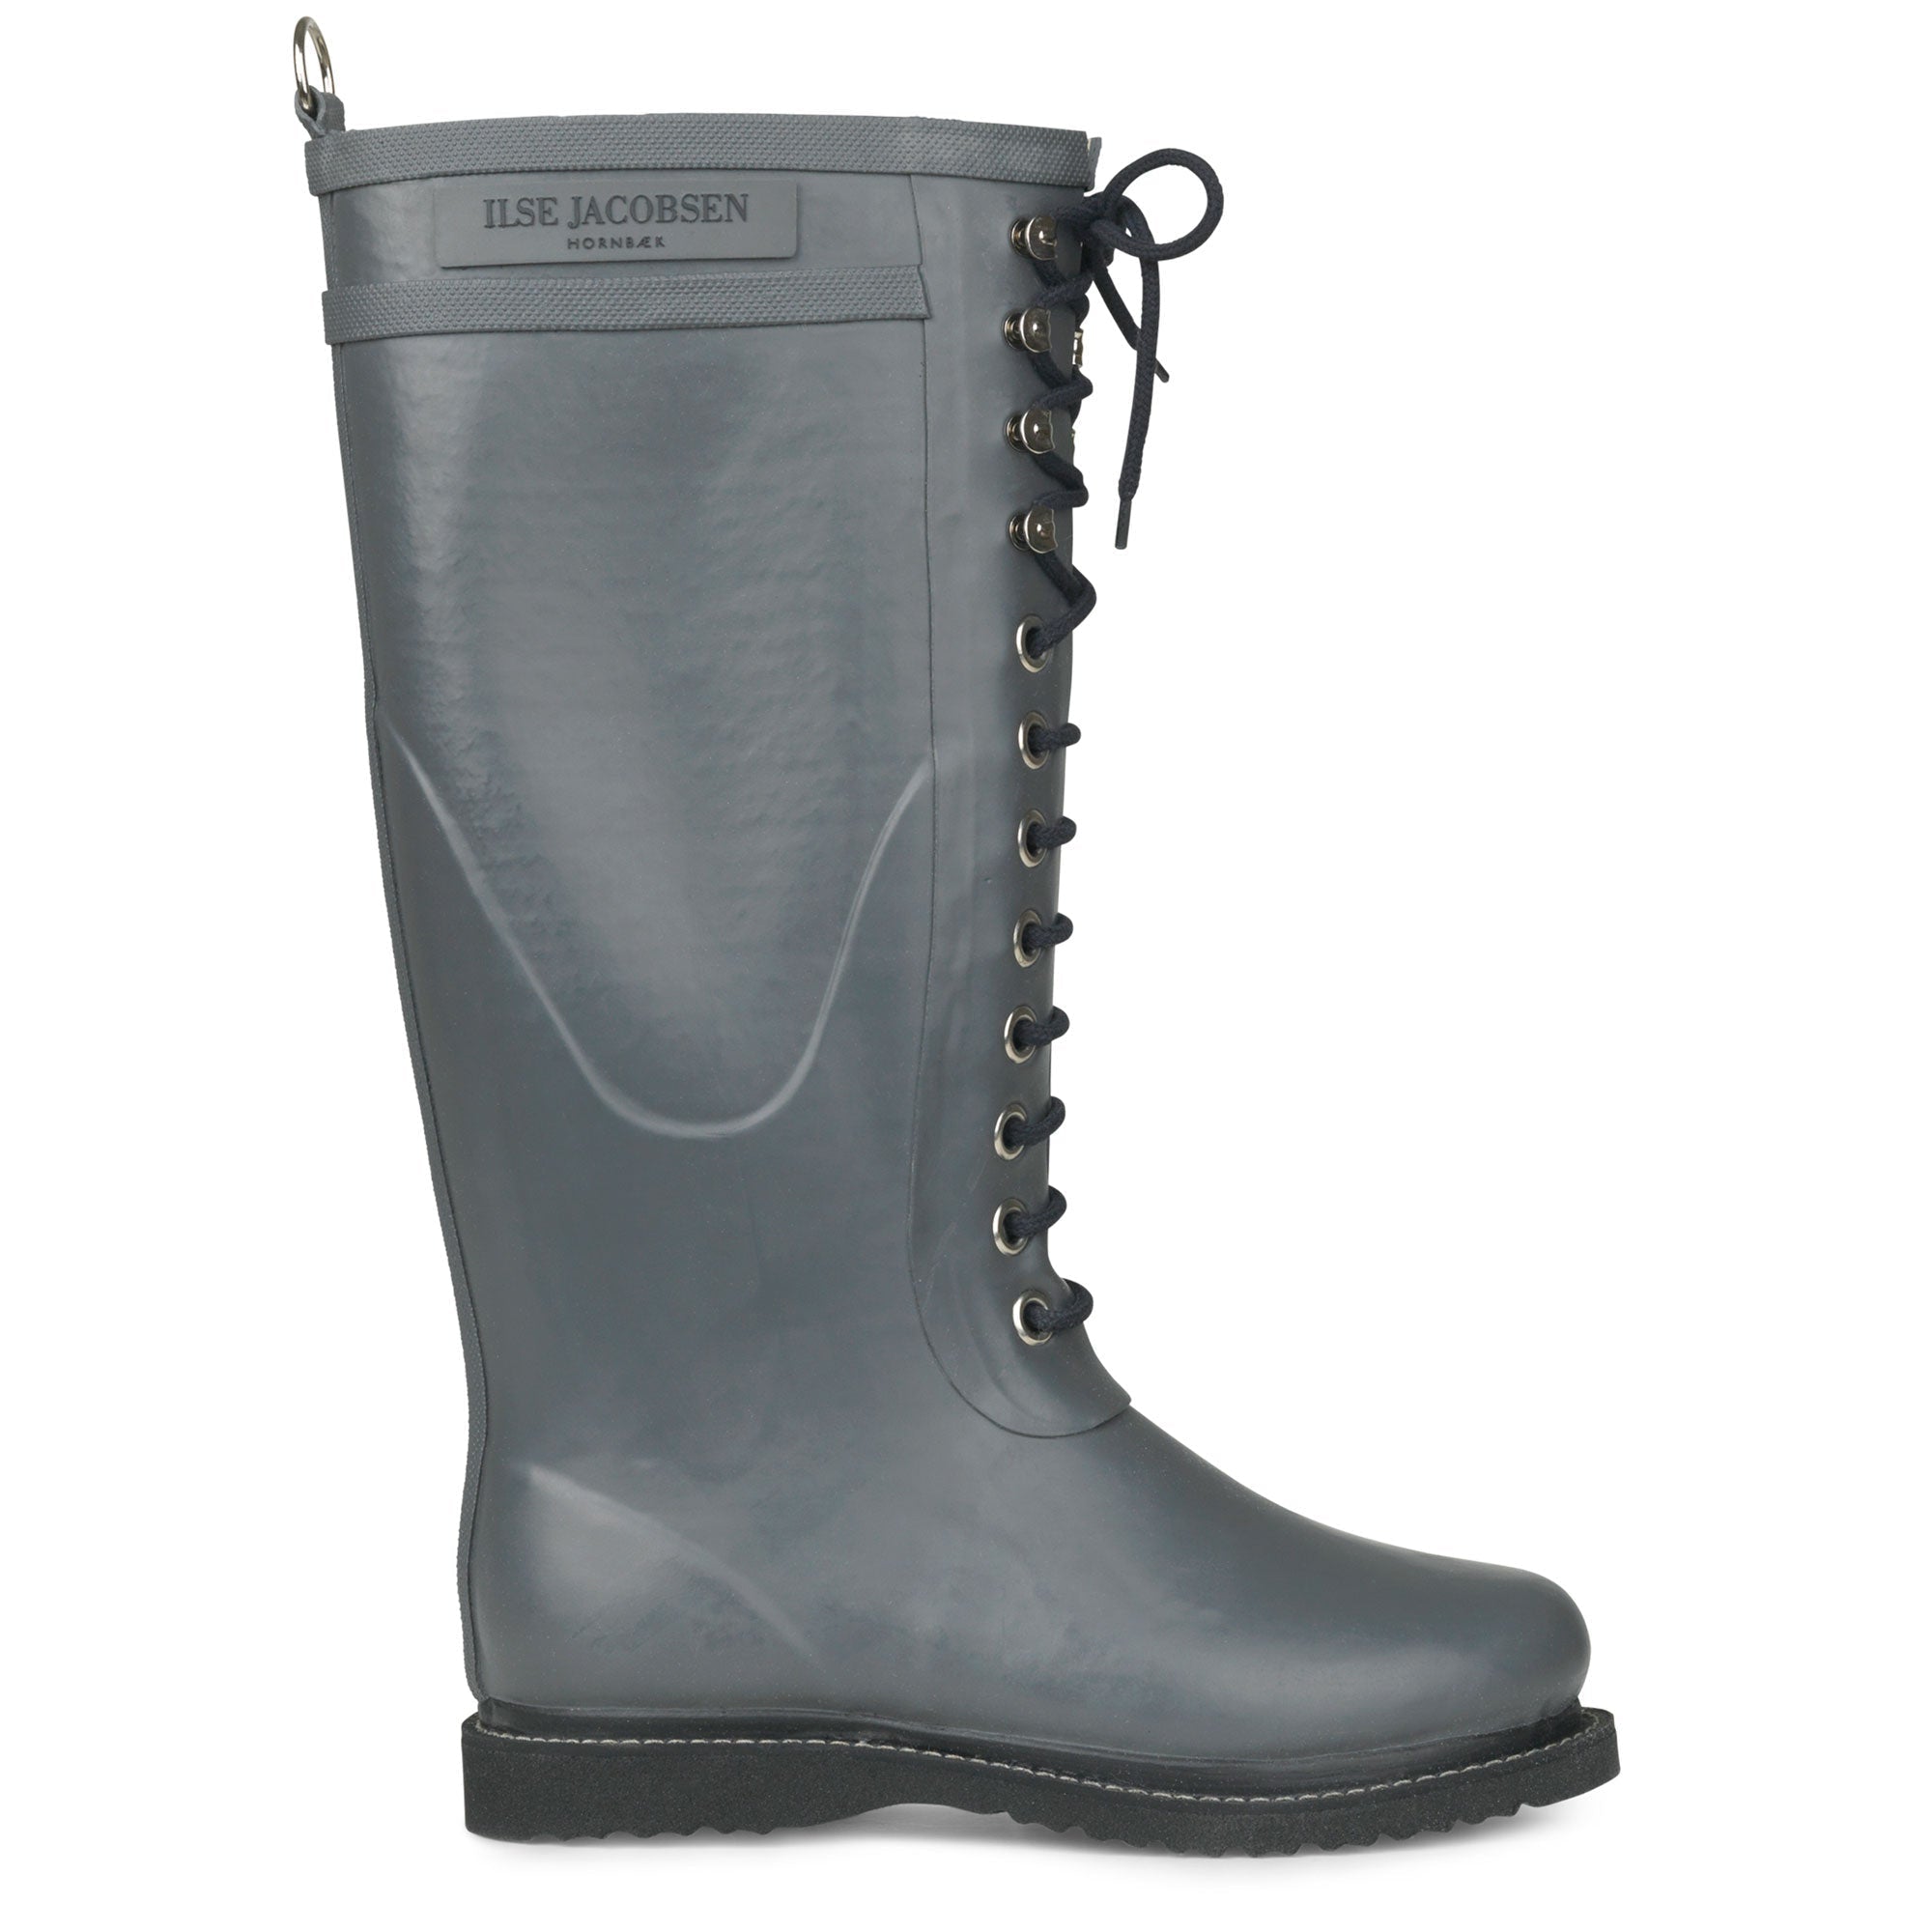 Long Rubber Boots RUB1 - 006 Grey | Grey